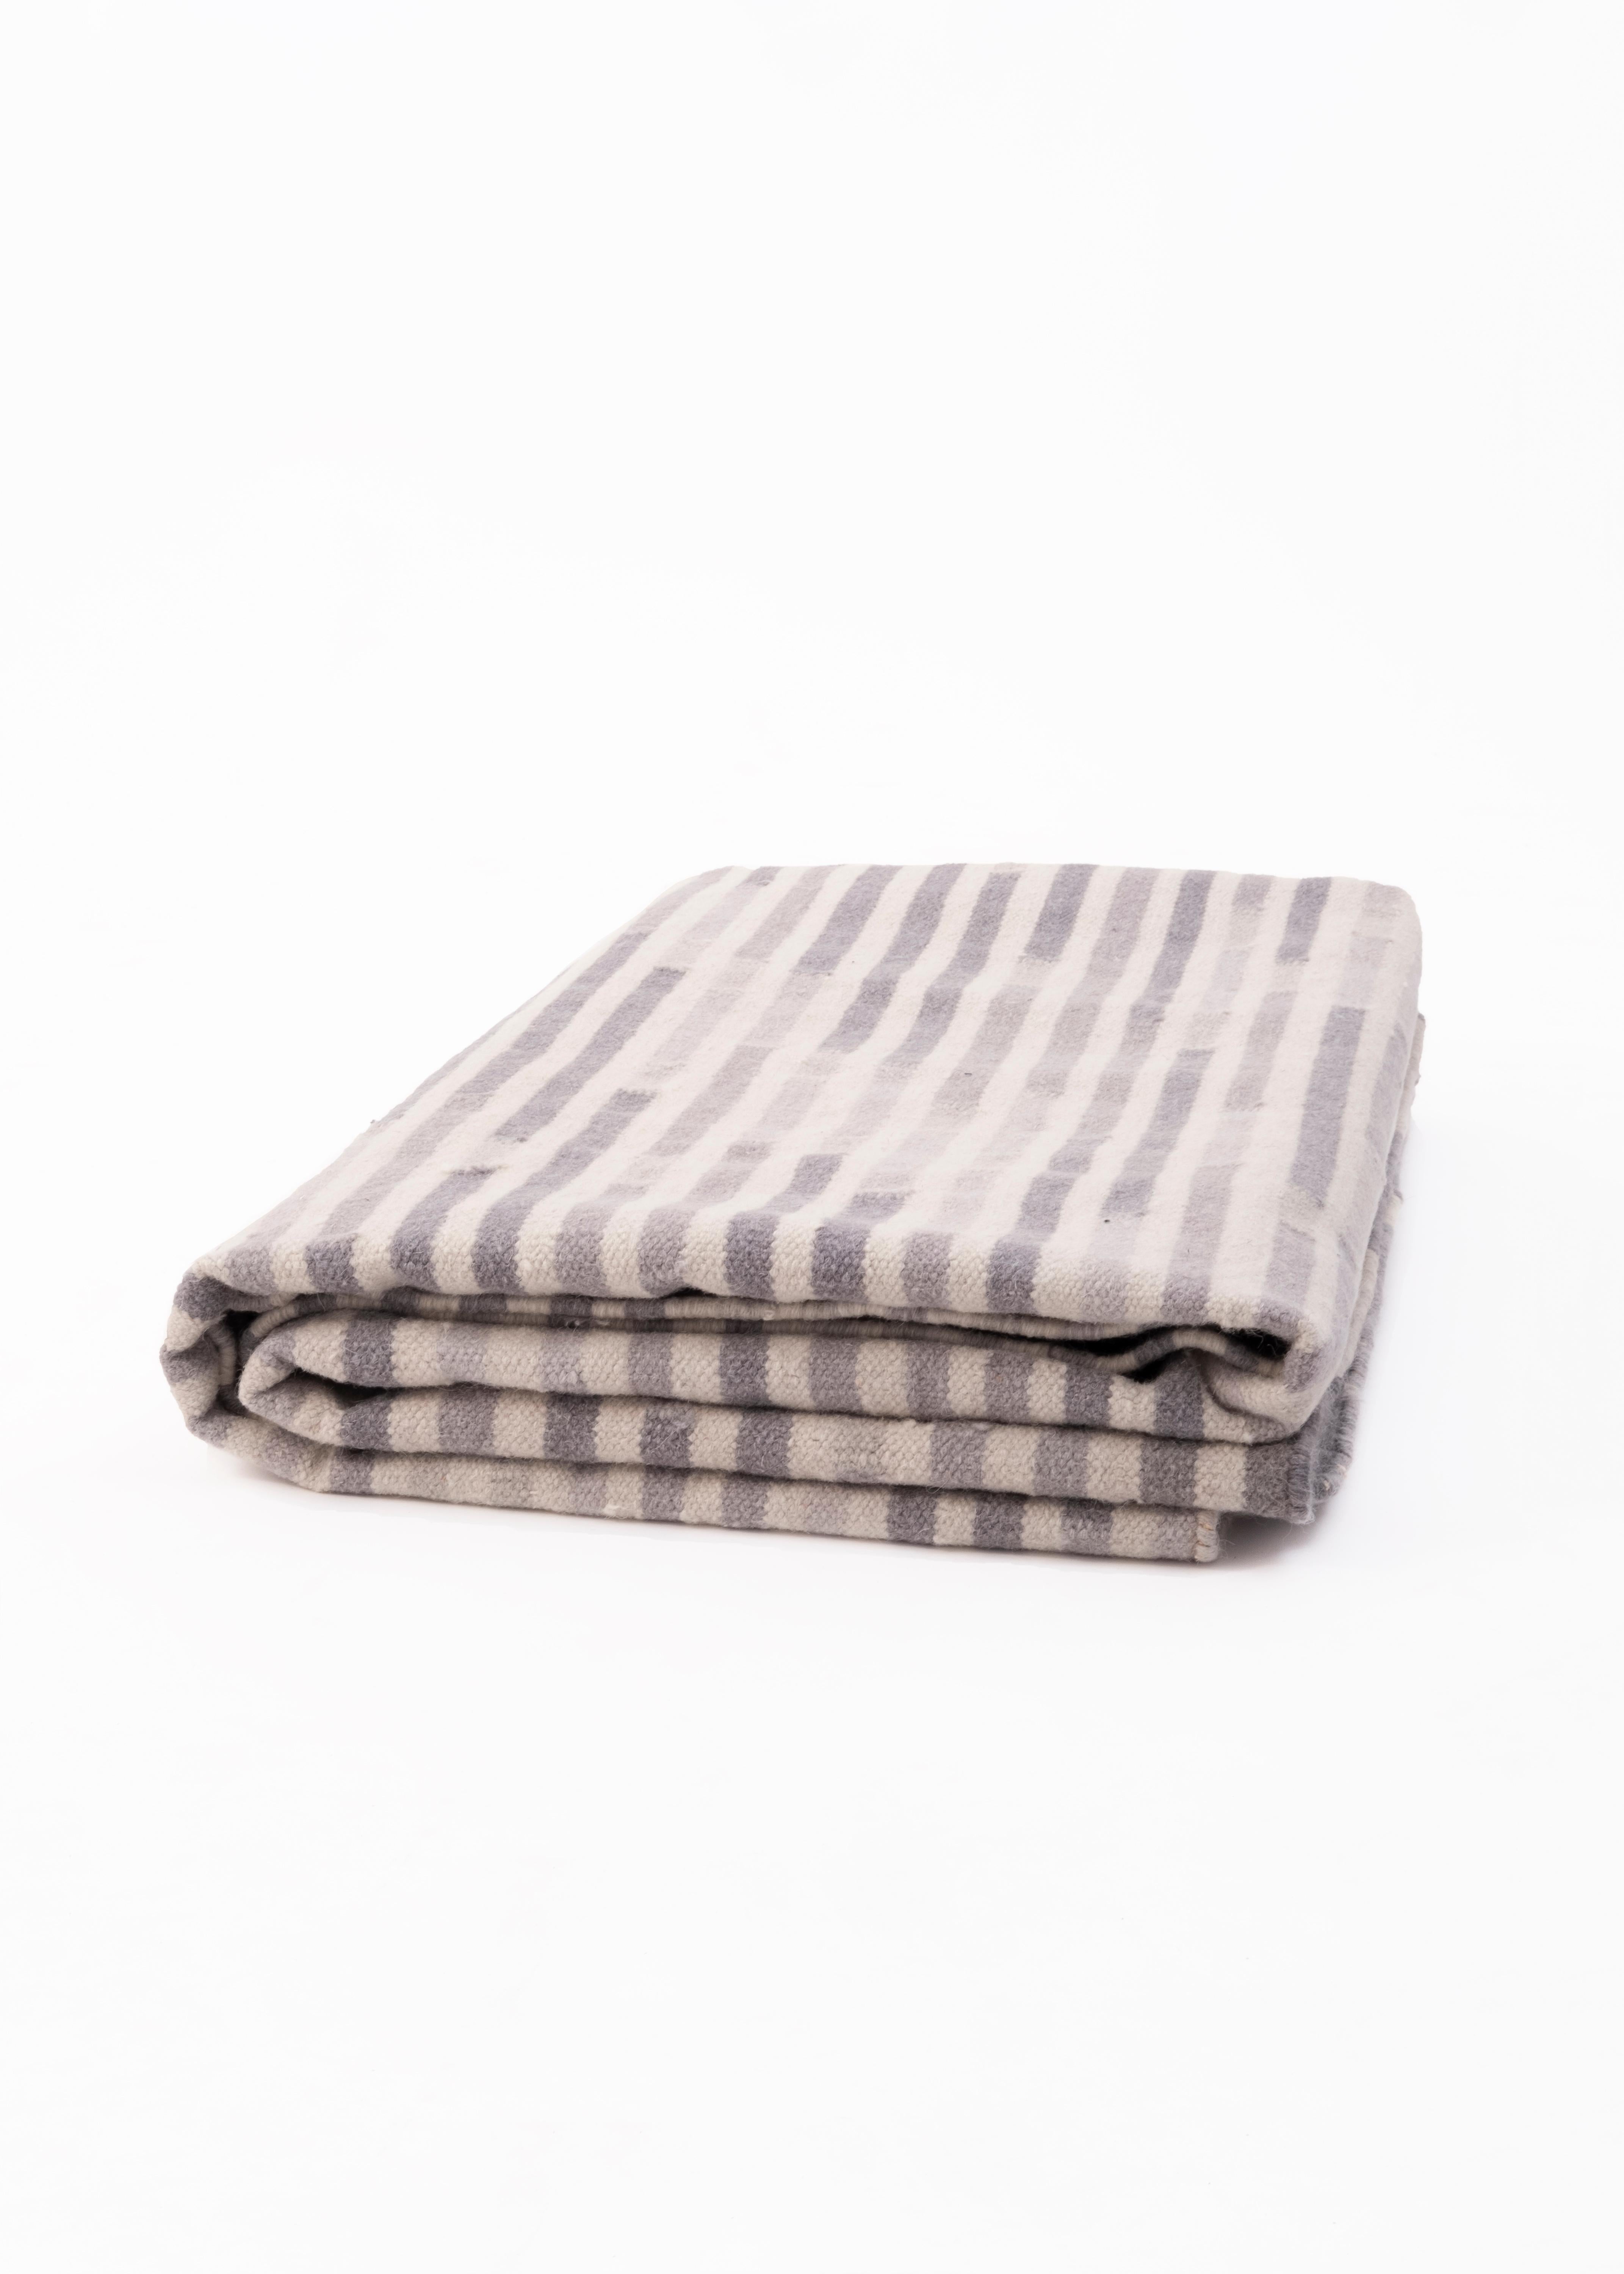 Tempo Uno - Cold - Design Summer Kilim Rug Contemporary Carpet Wool Cotton Flat For Sale 1